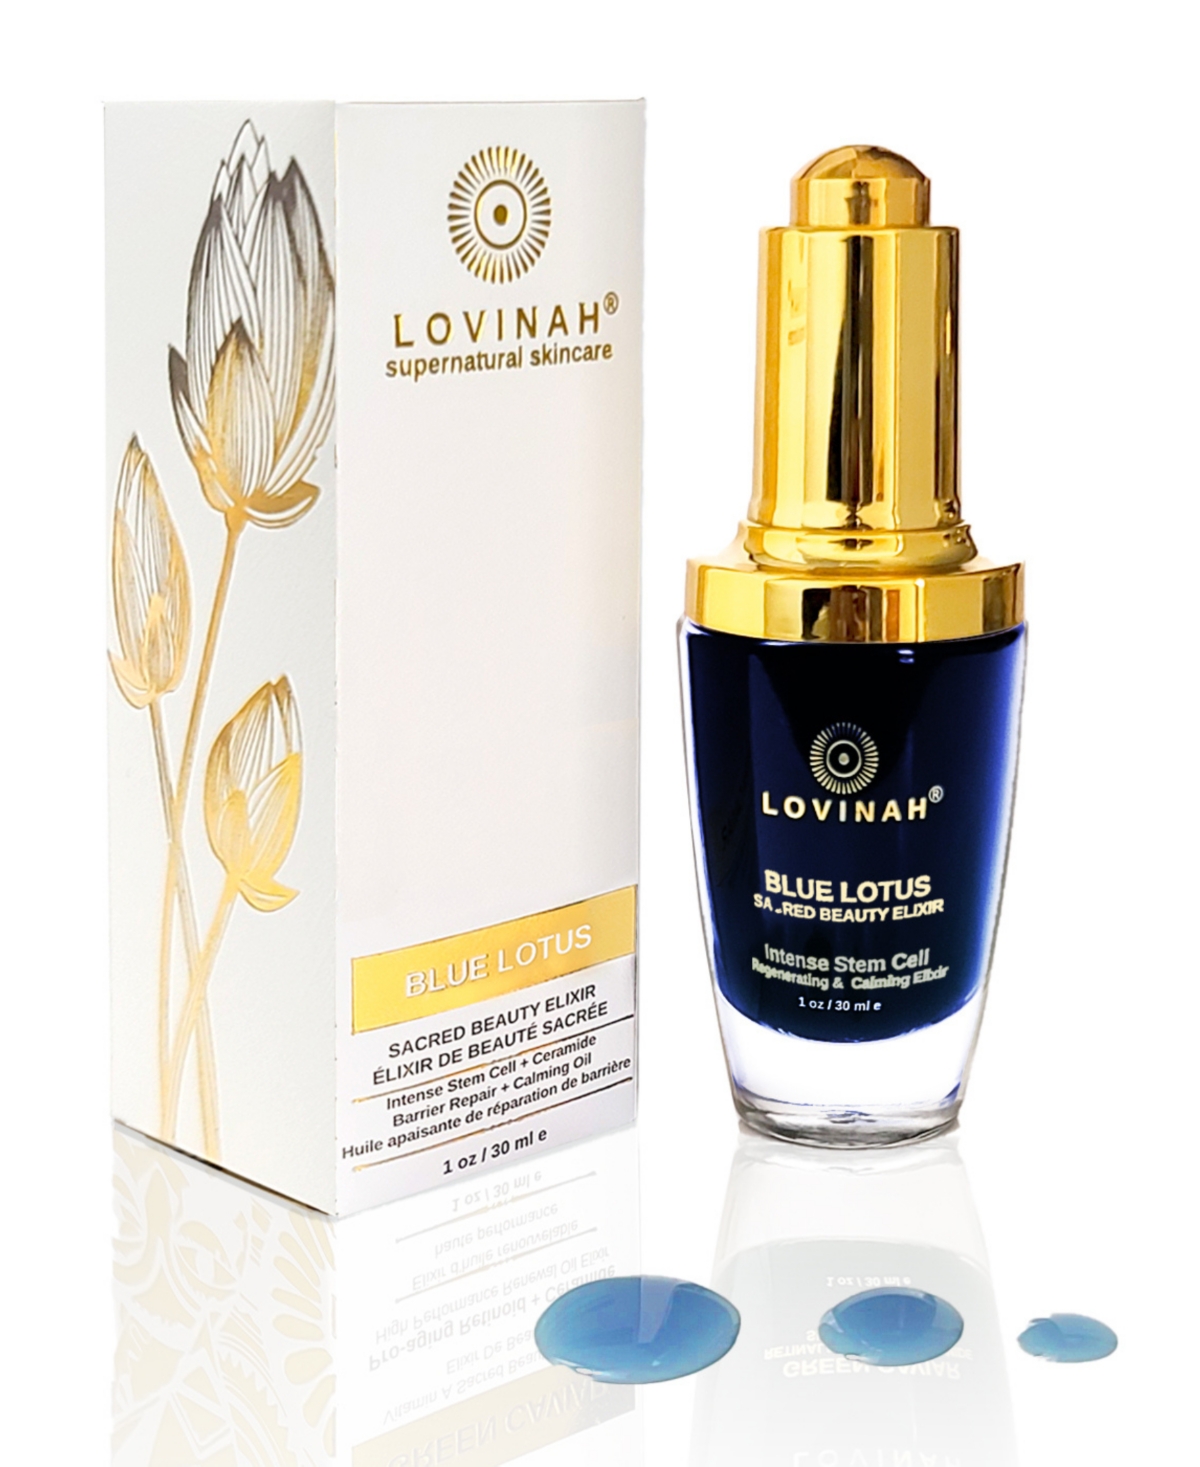 Lovinah Skincare Blue Lotus Calming Oil, 1 oz.